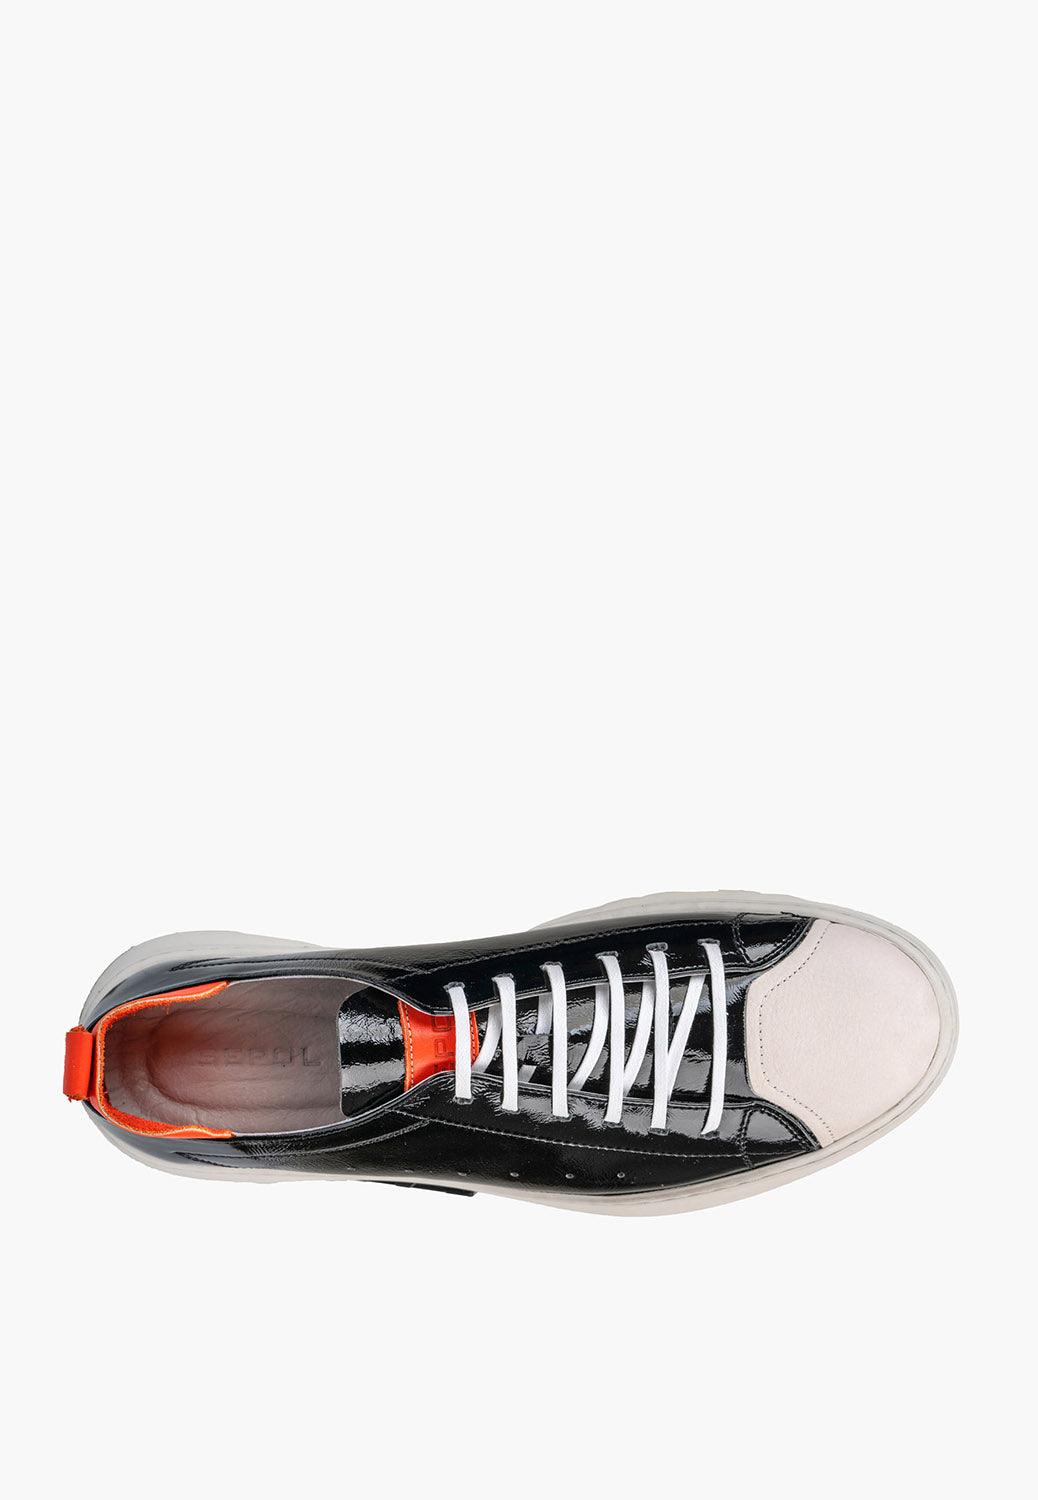 Bahama Sneaker Black Patent - SEPOL Shoes